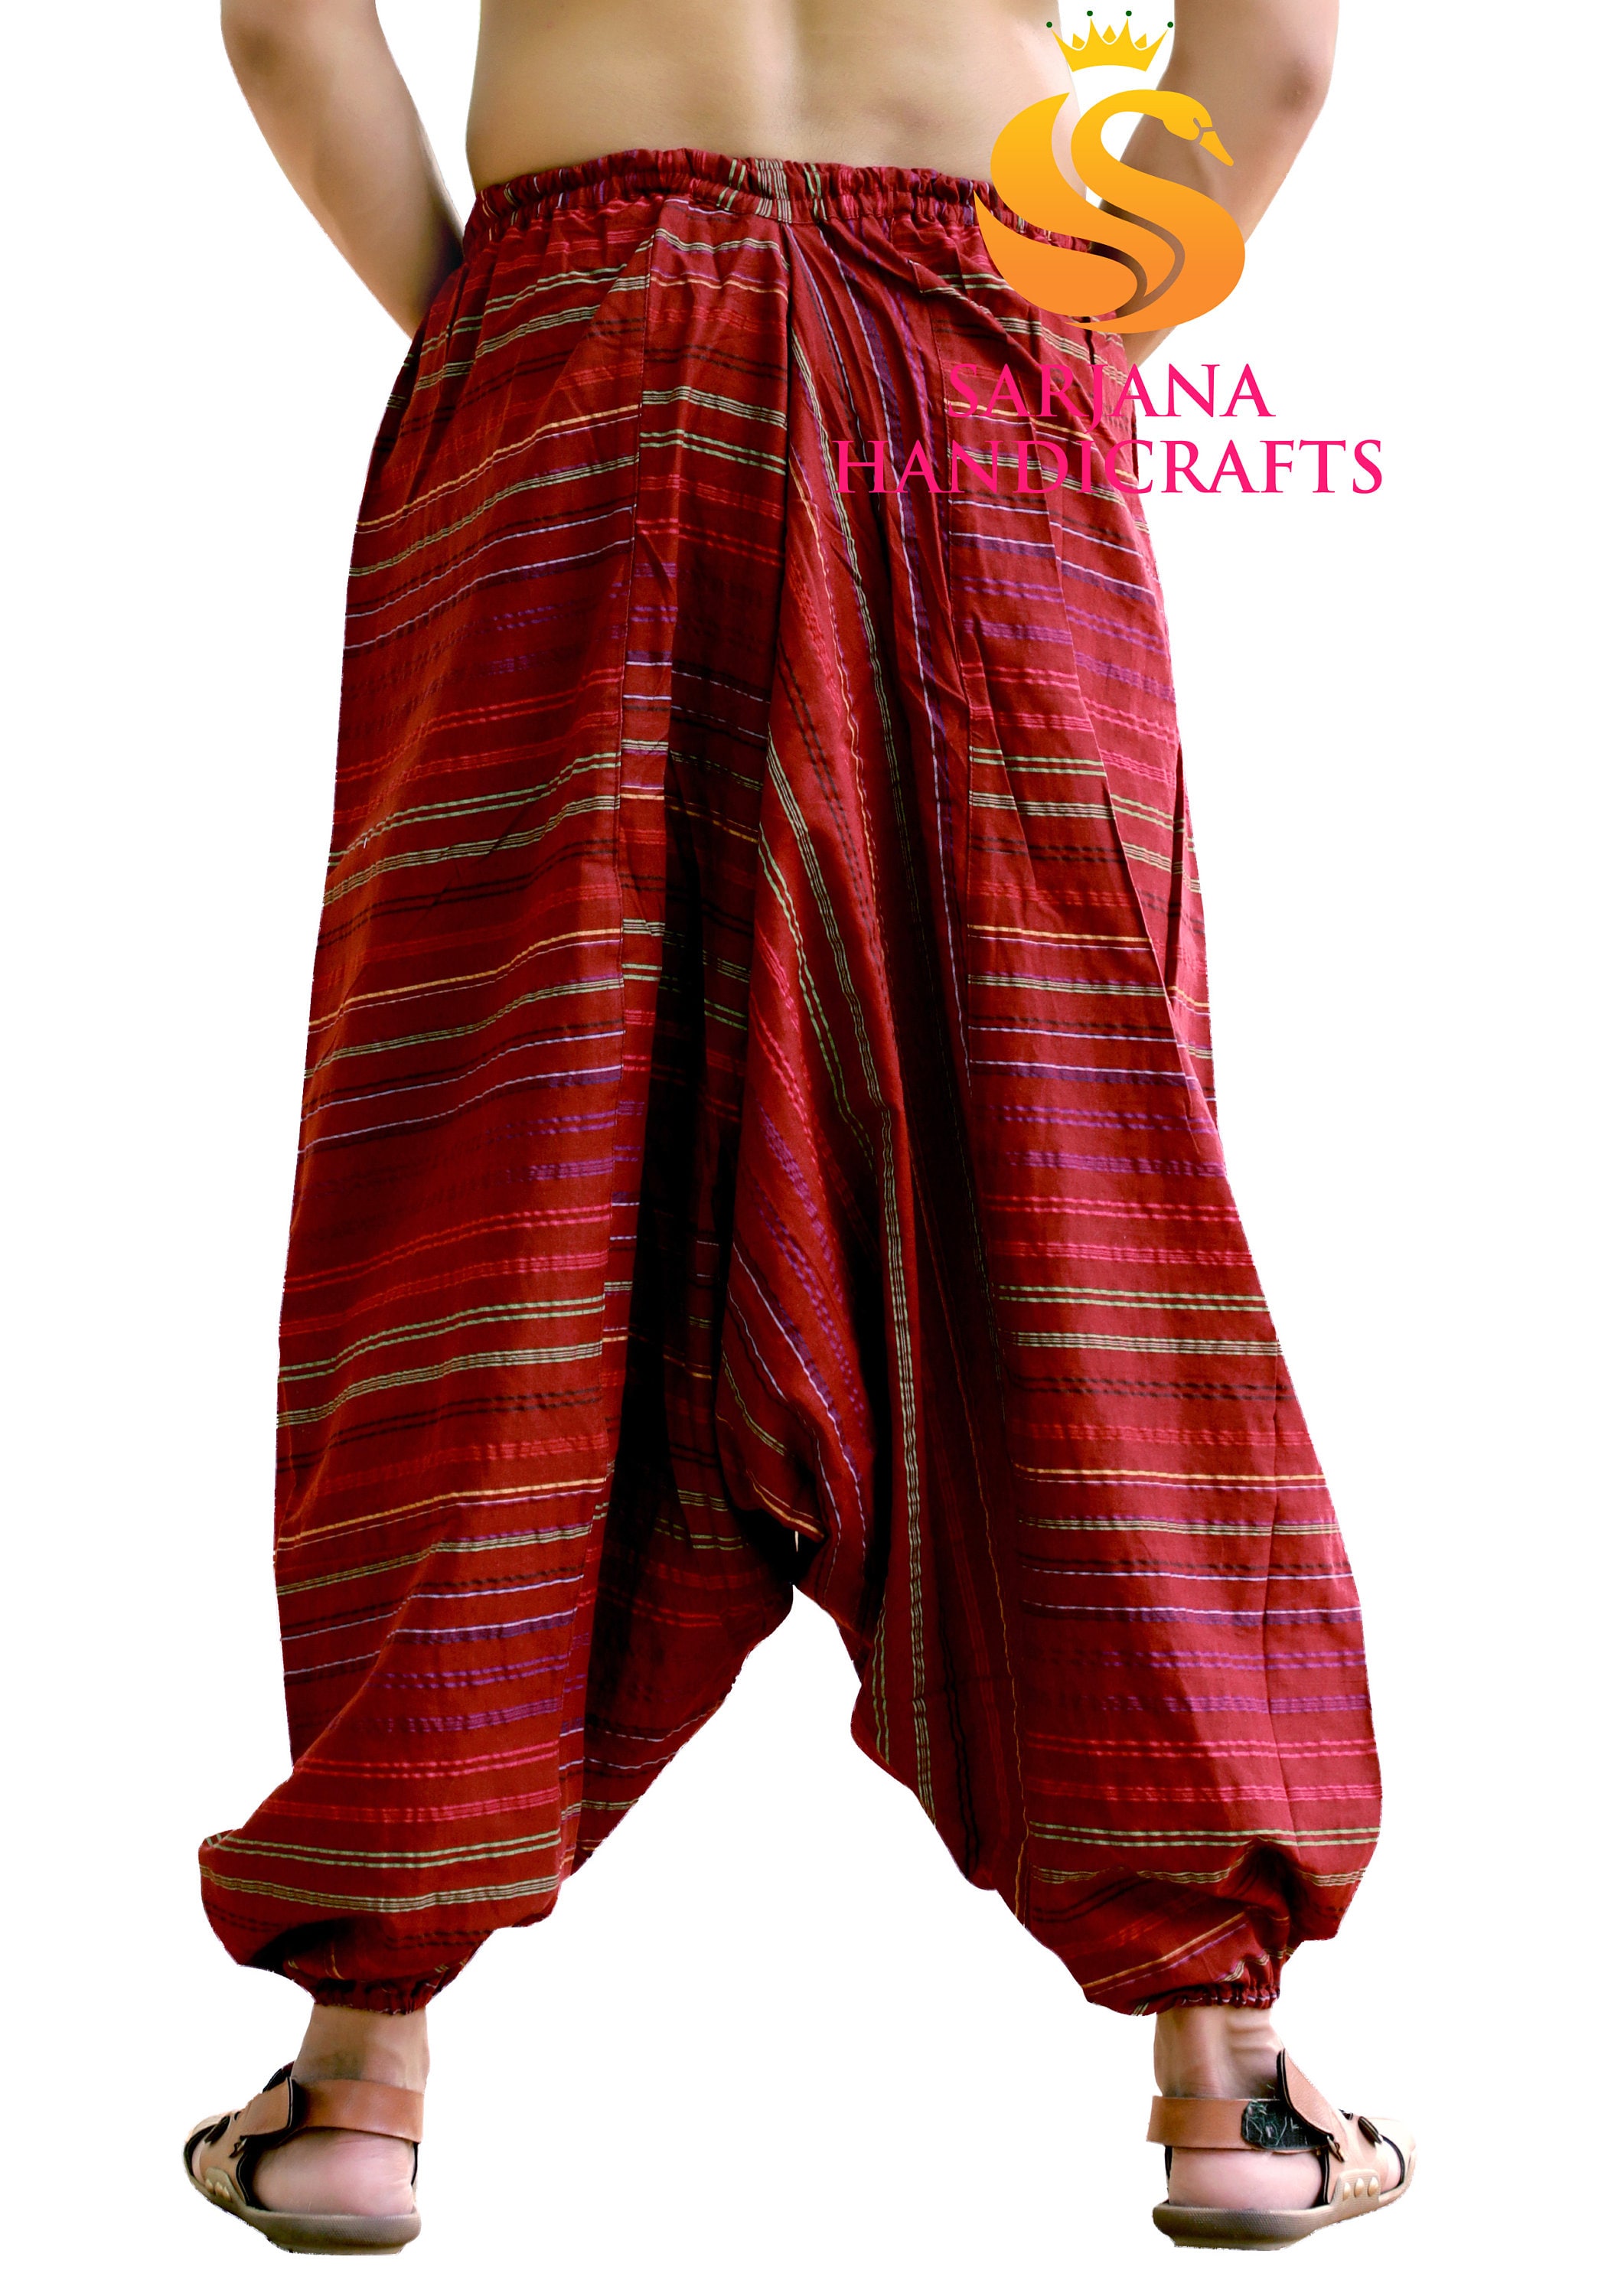 Sarjana Handicrafts - Men Women Cotton Solid Harem Pants Yoga Unisex Drop  Crotch Pants – Sarjana Shop